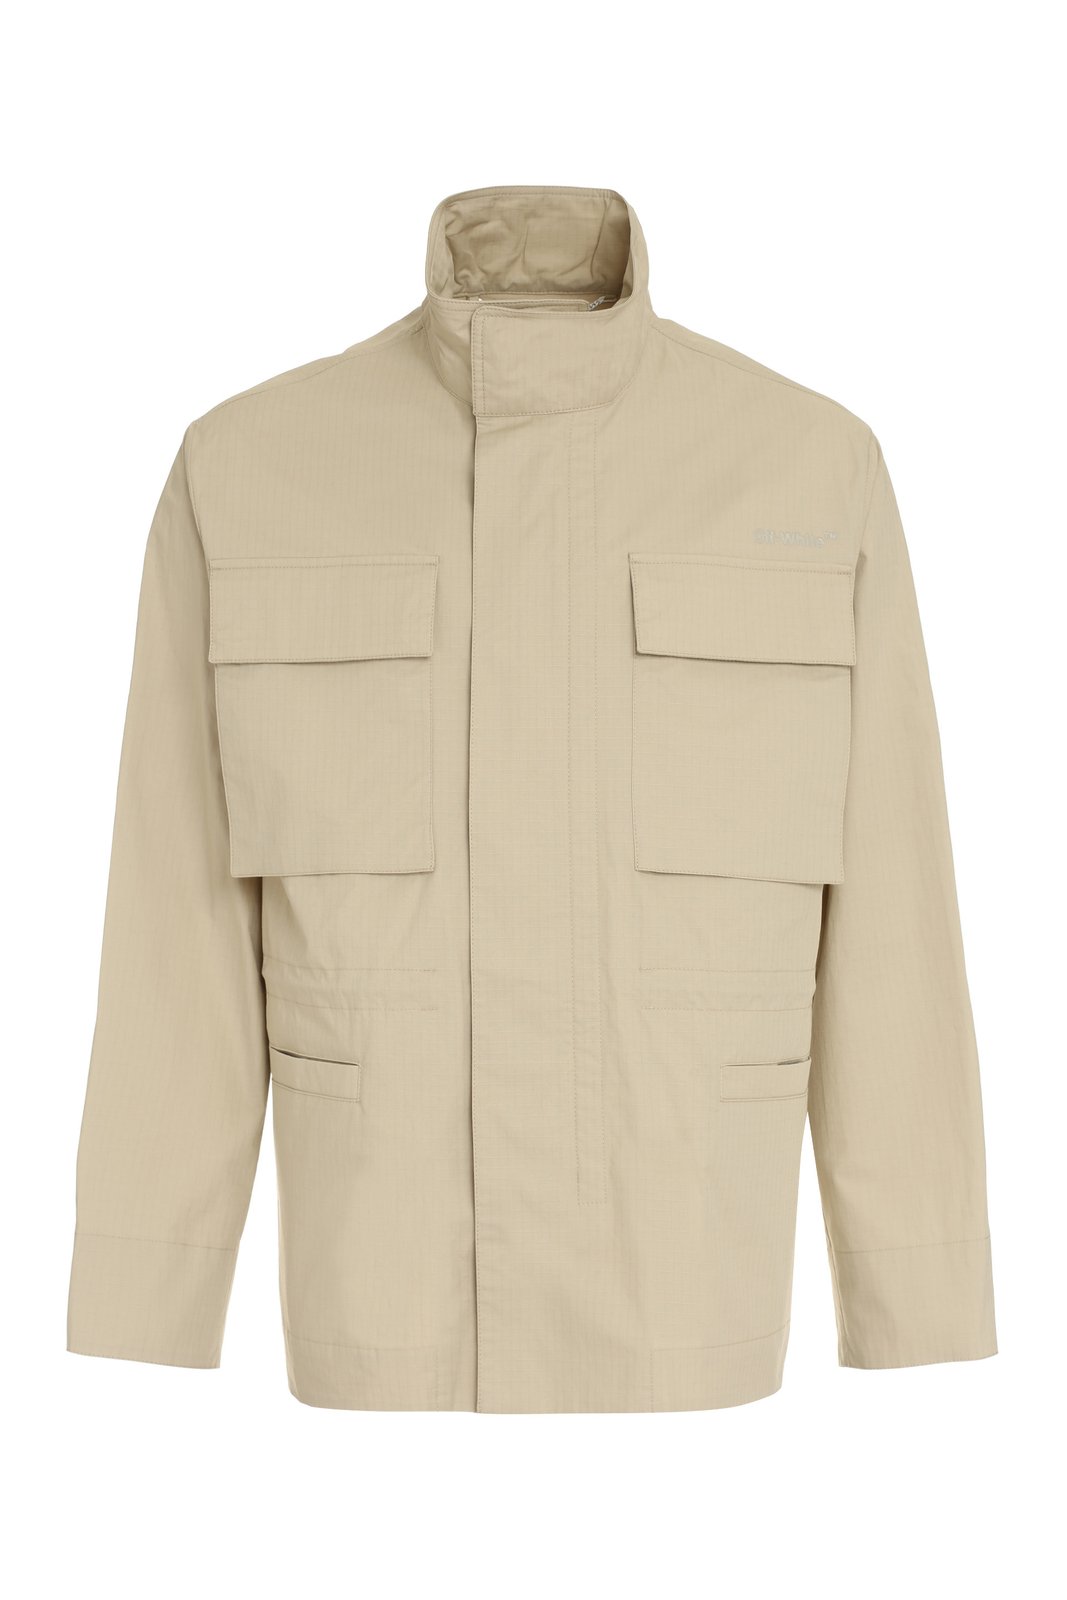 Off-White Diagonal Tab Field Jacket